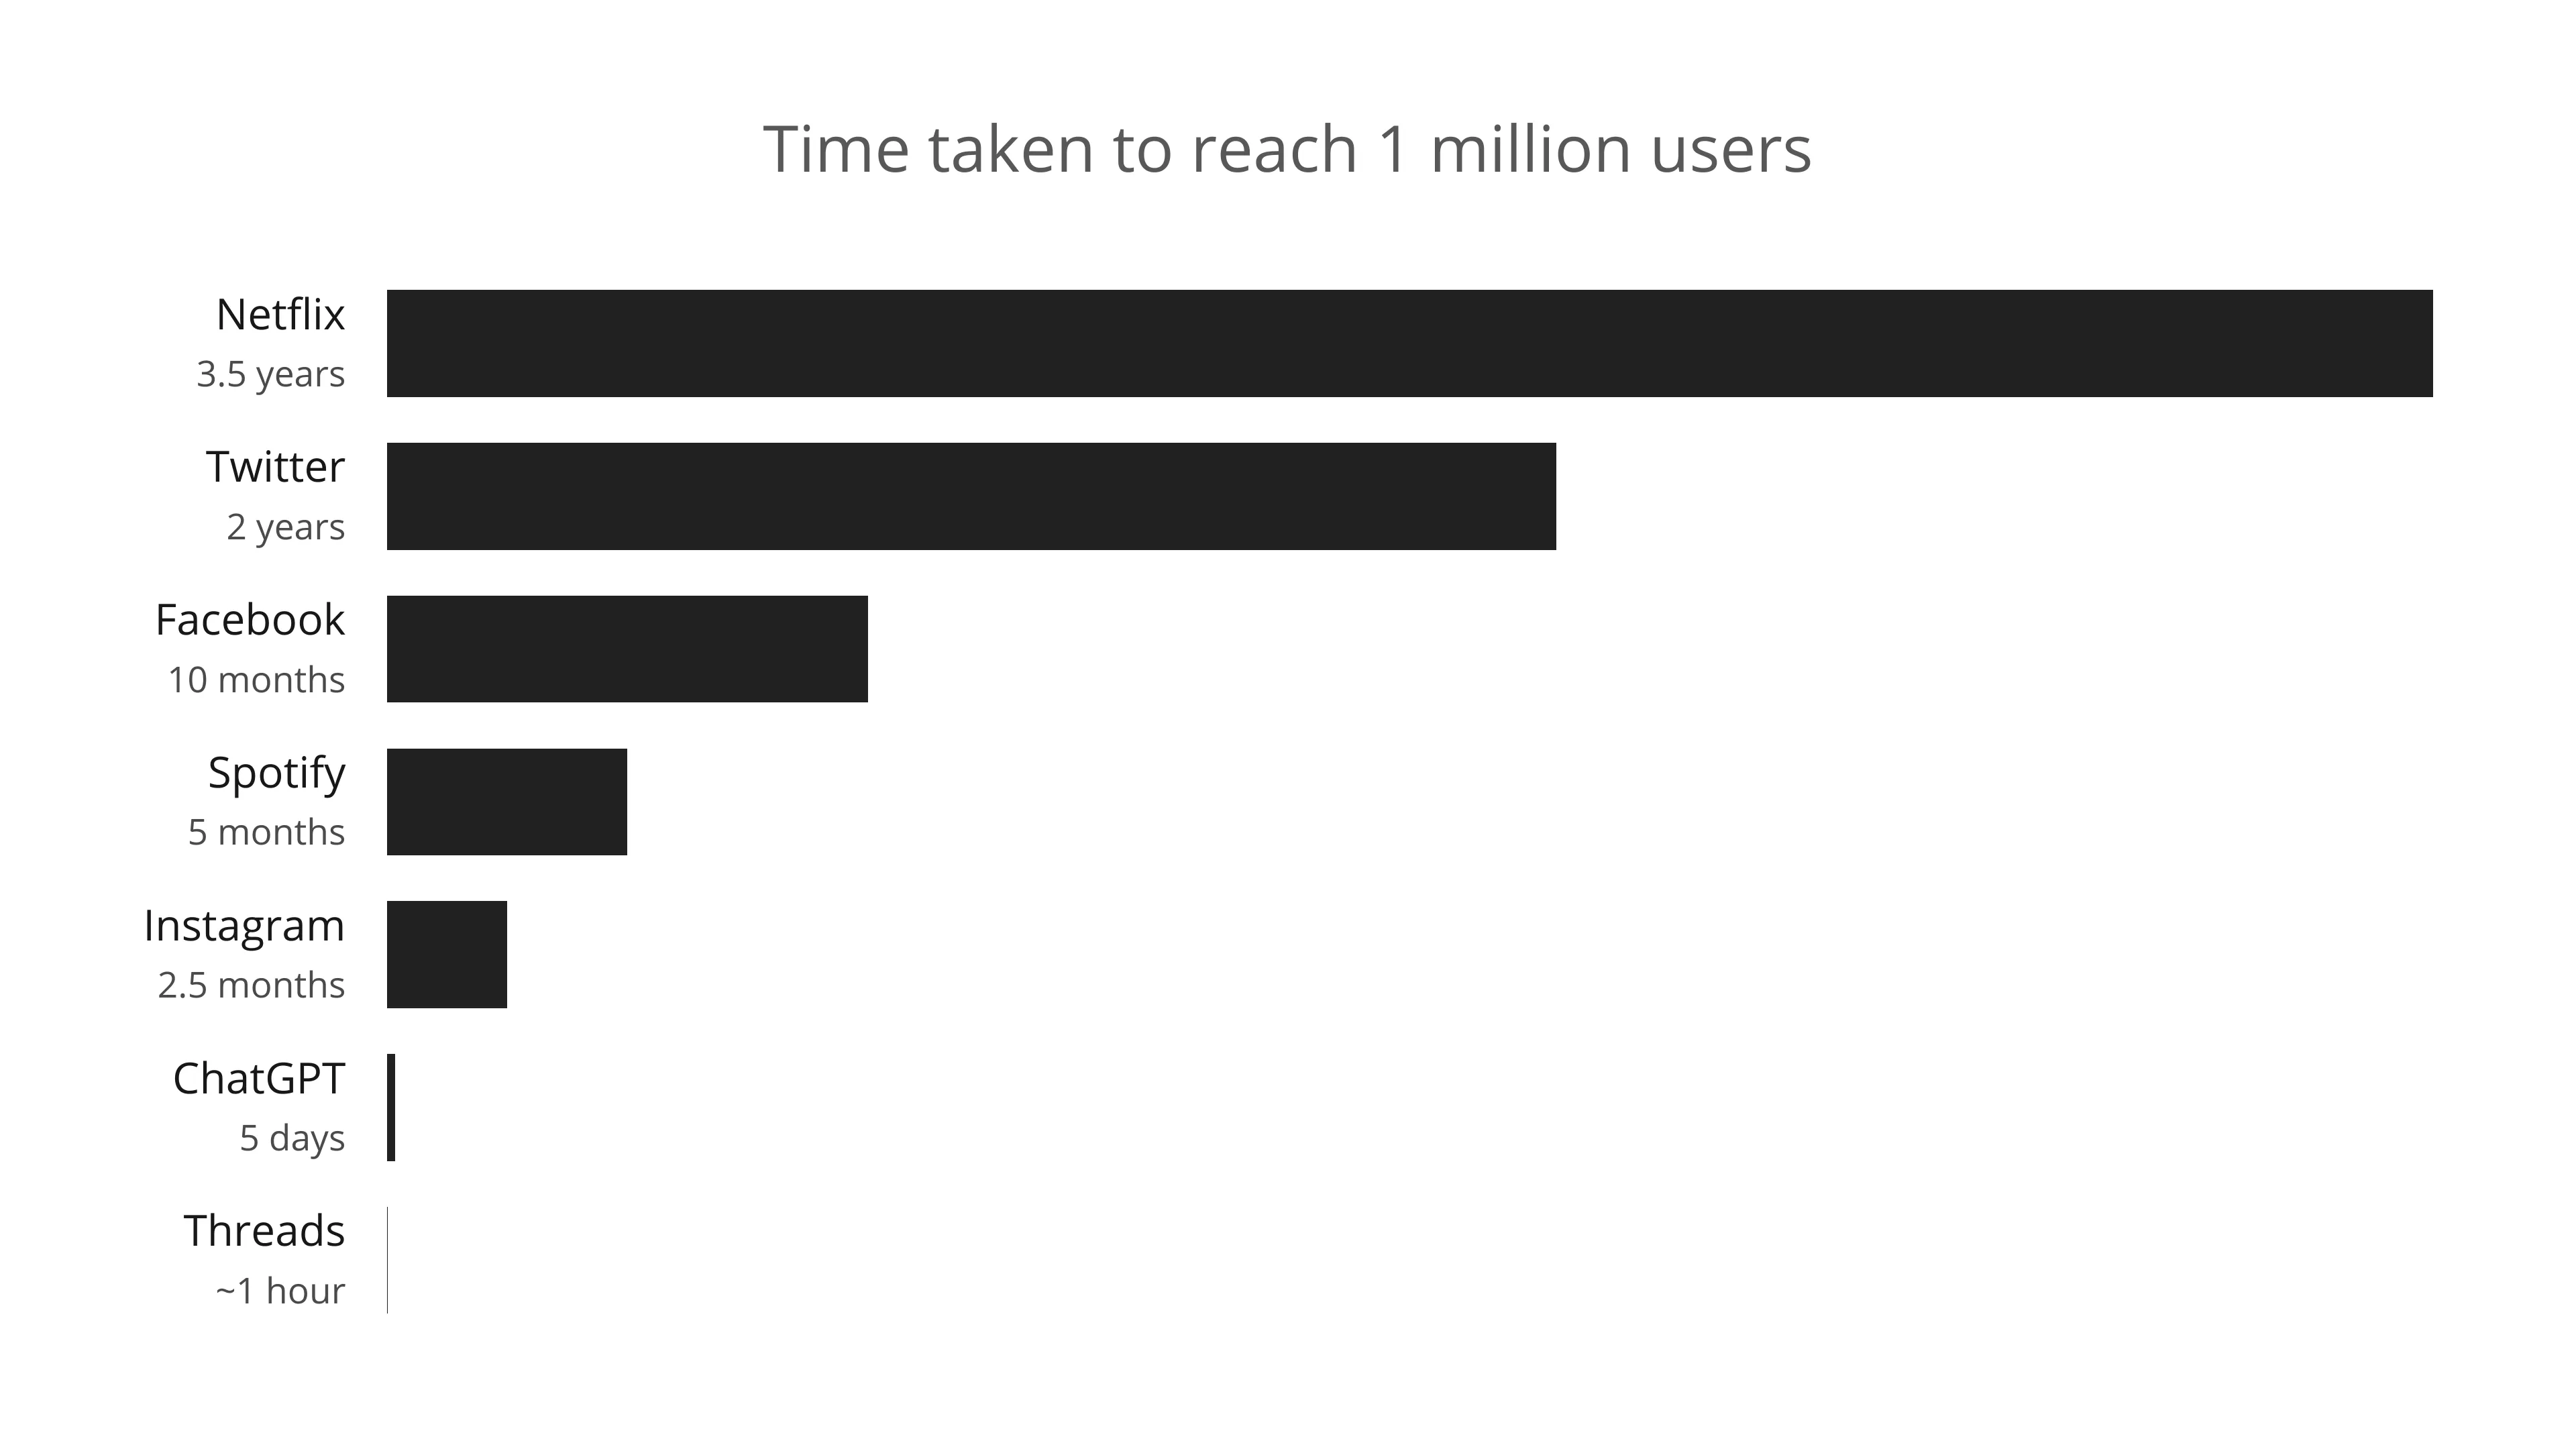 Time taken to reach 1 million users